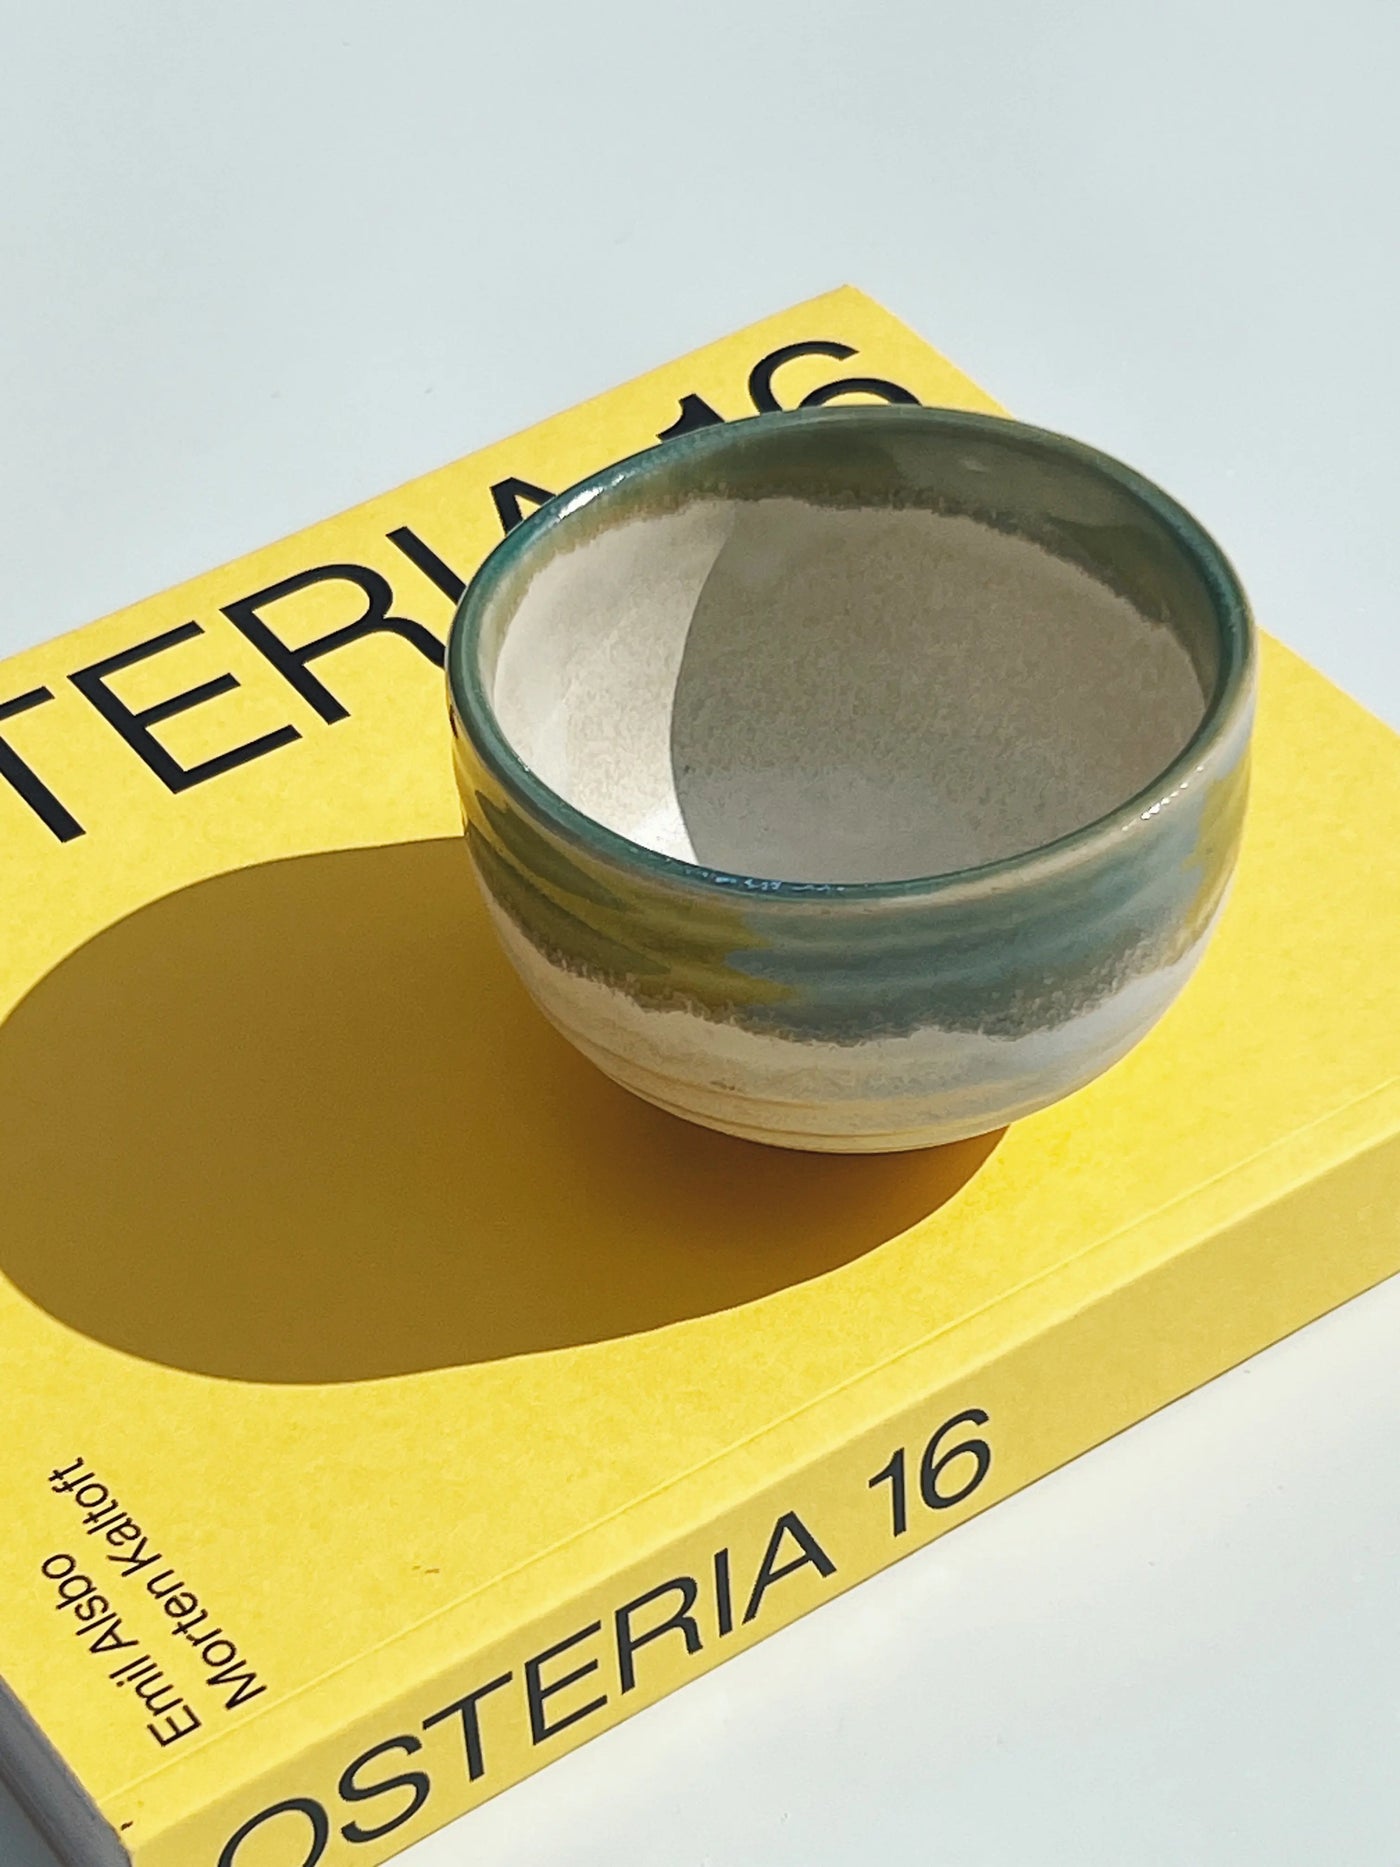 Håndlavet hvid /lysegrøn matcha kop uden hank fra Japan i keramik Studio Hafnia